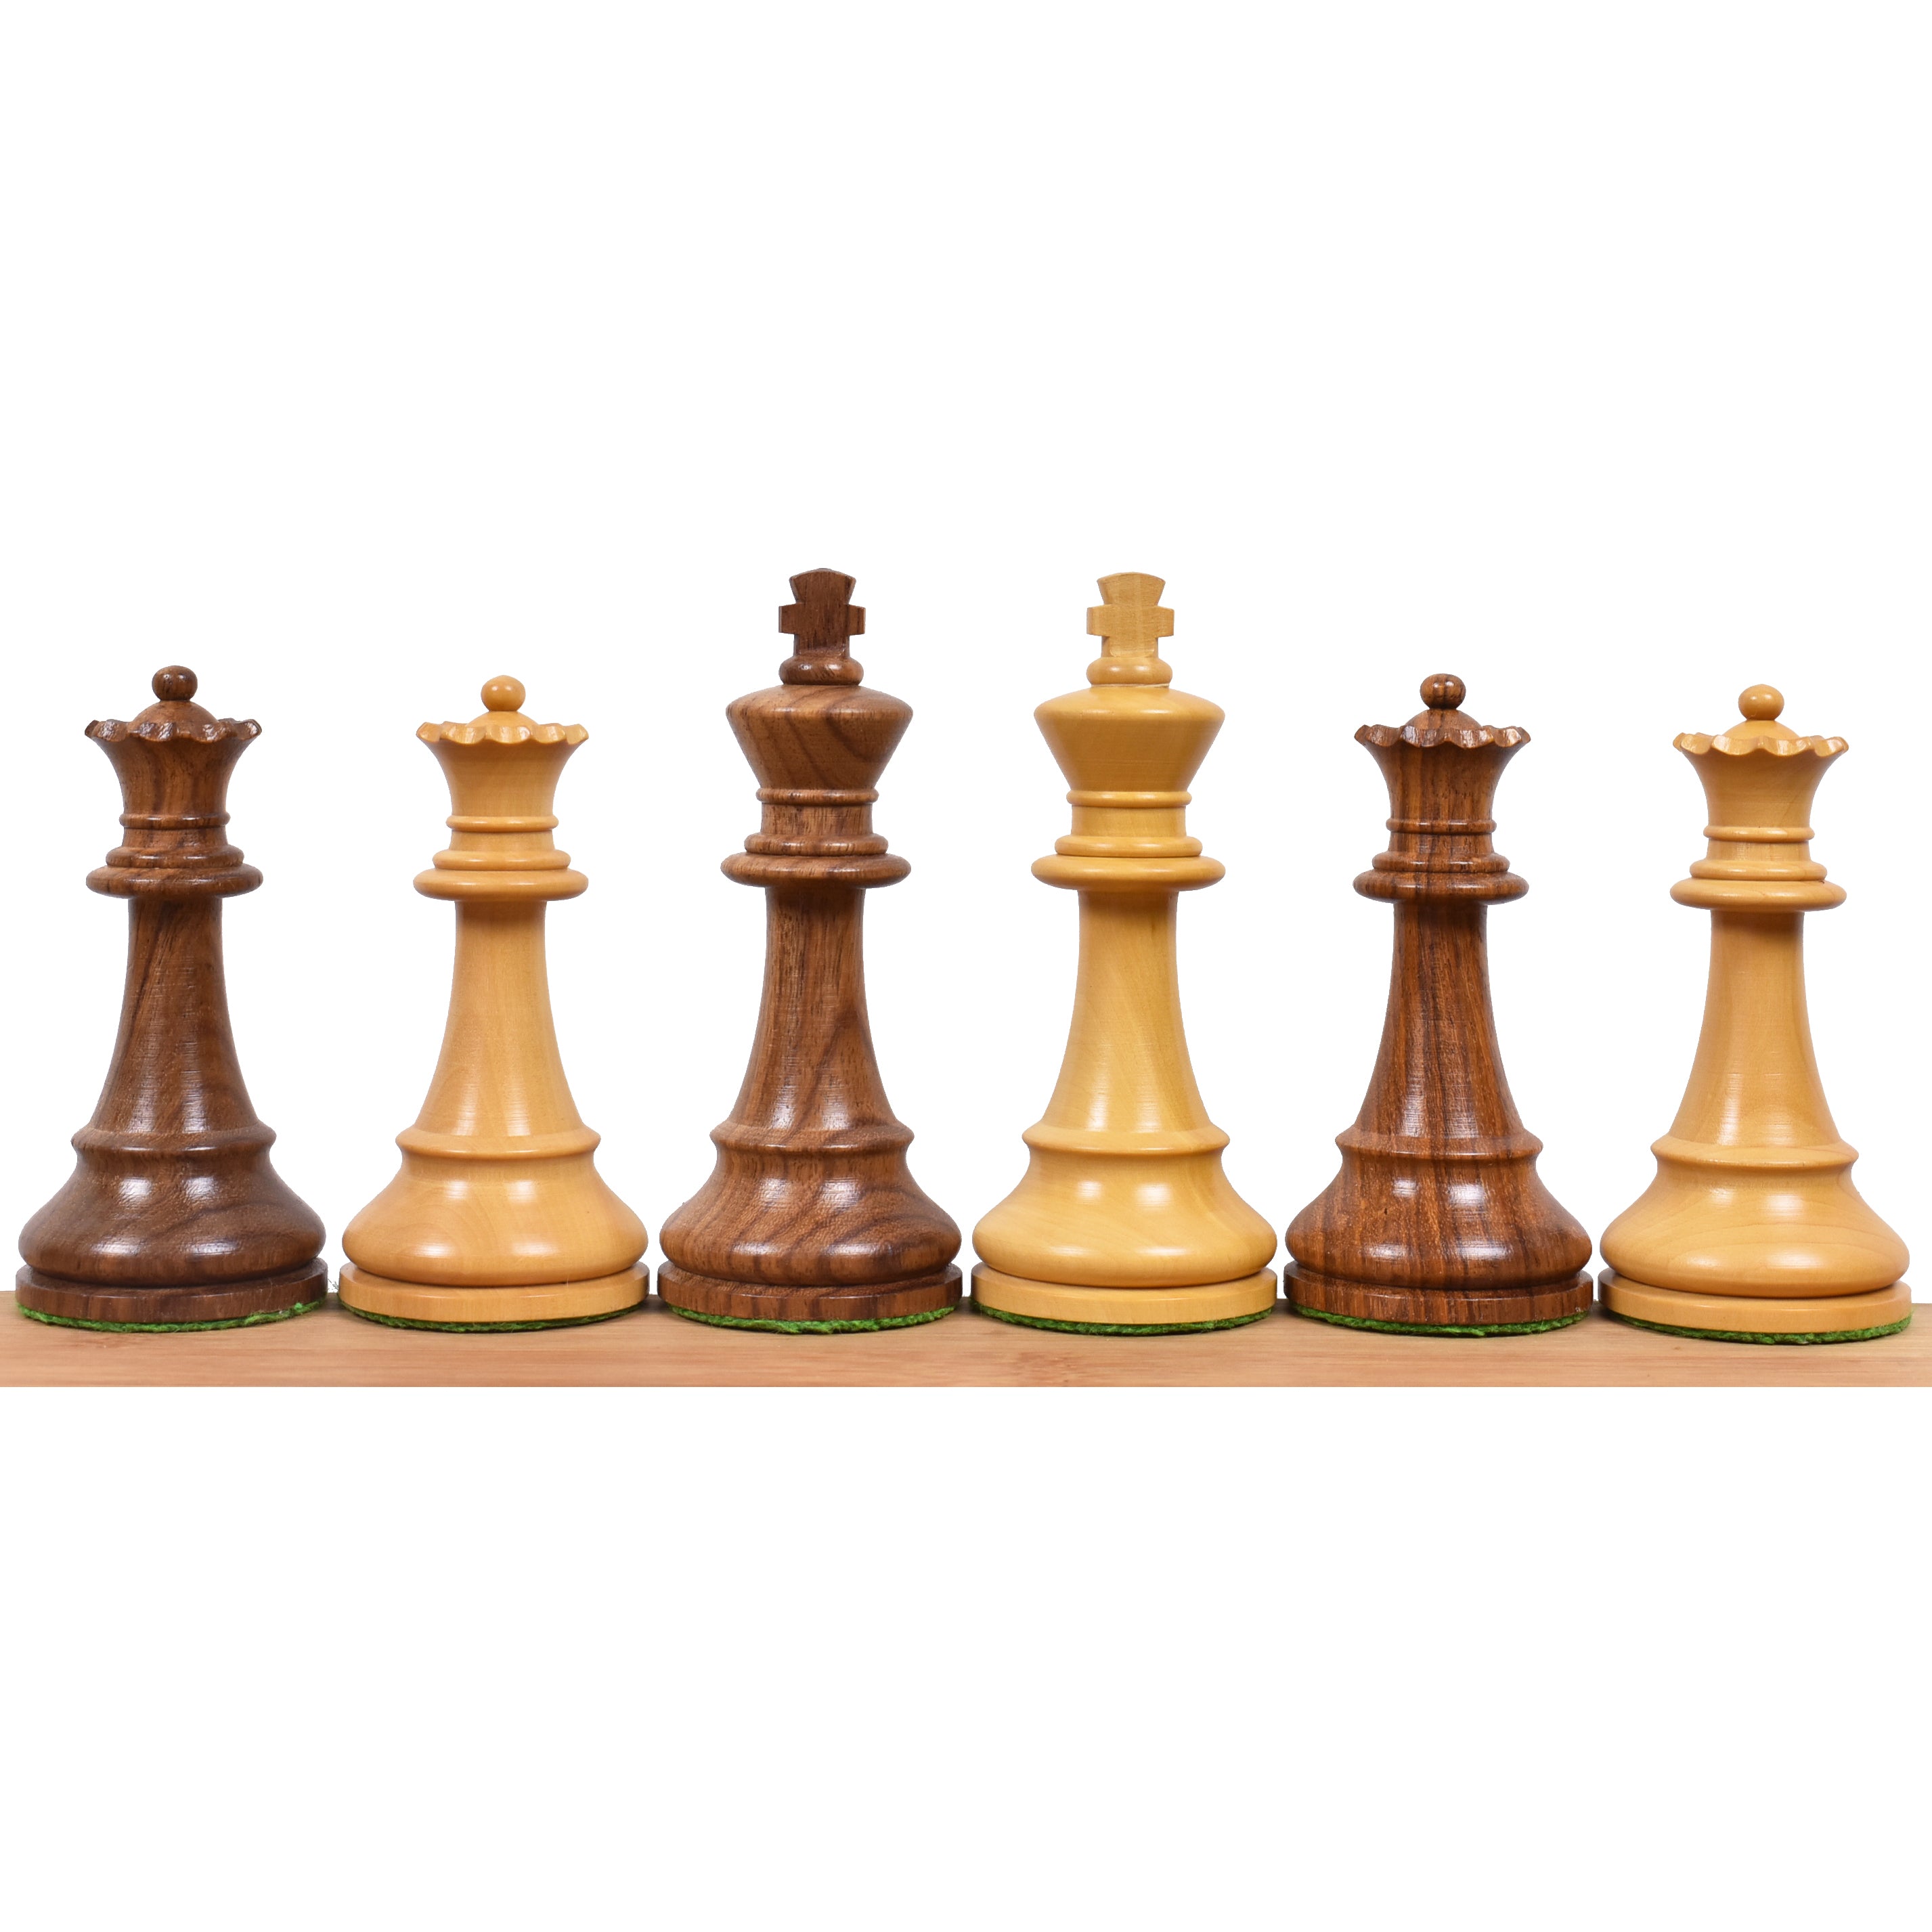  House of Chess - Grand Master Staunton Tournament